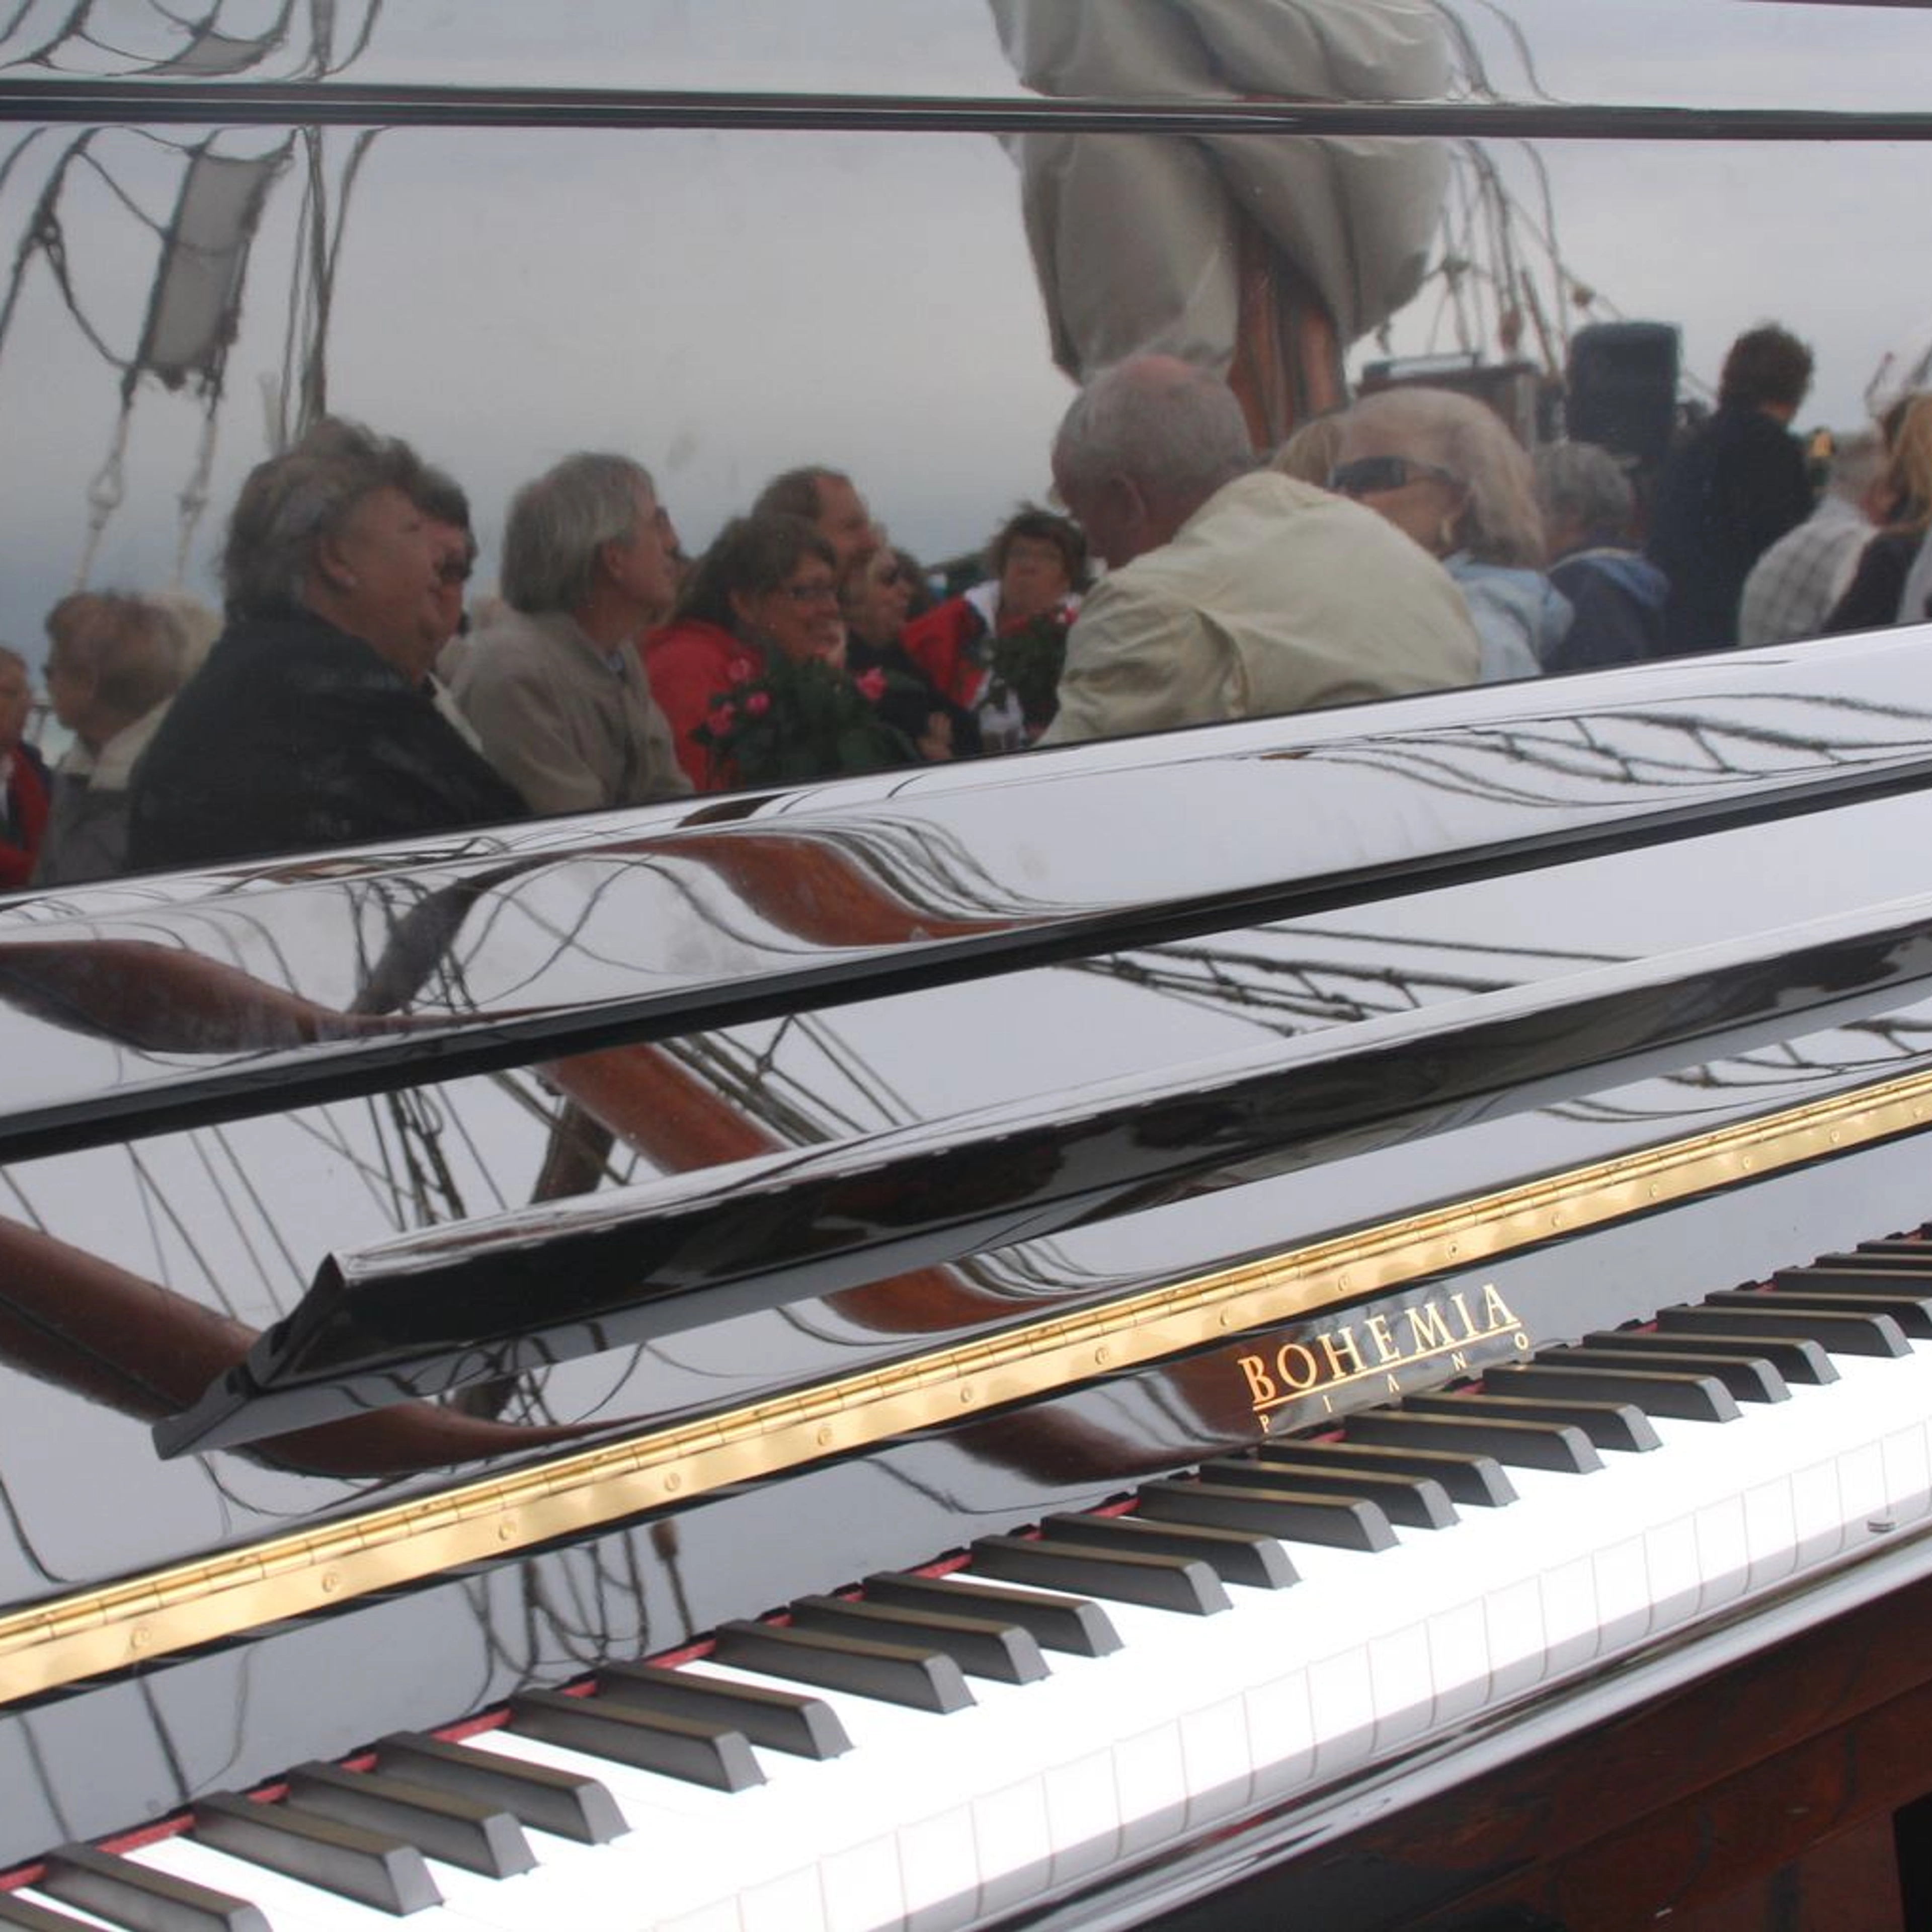 Piano - Jazz cruise on the Oslofjord - Oslo, Norway